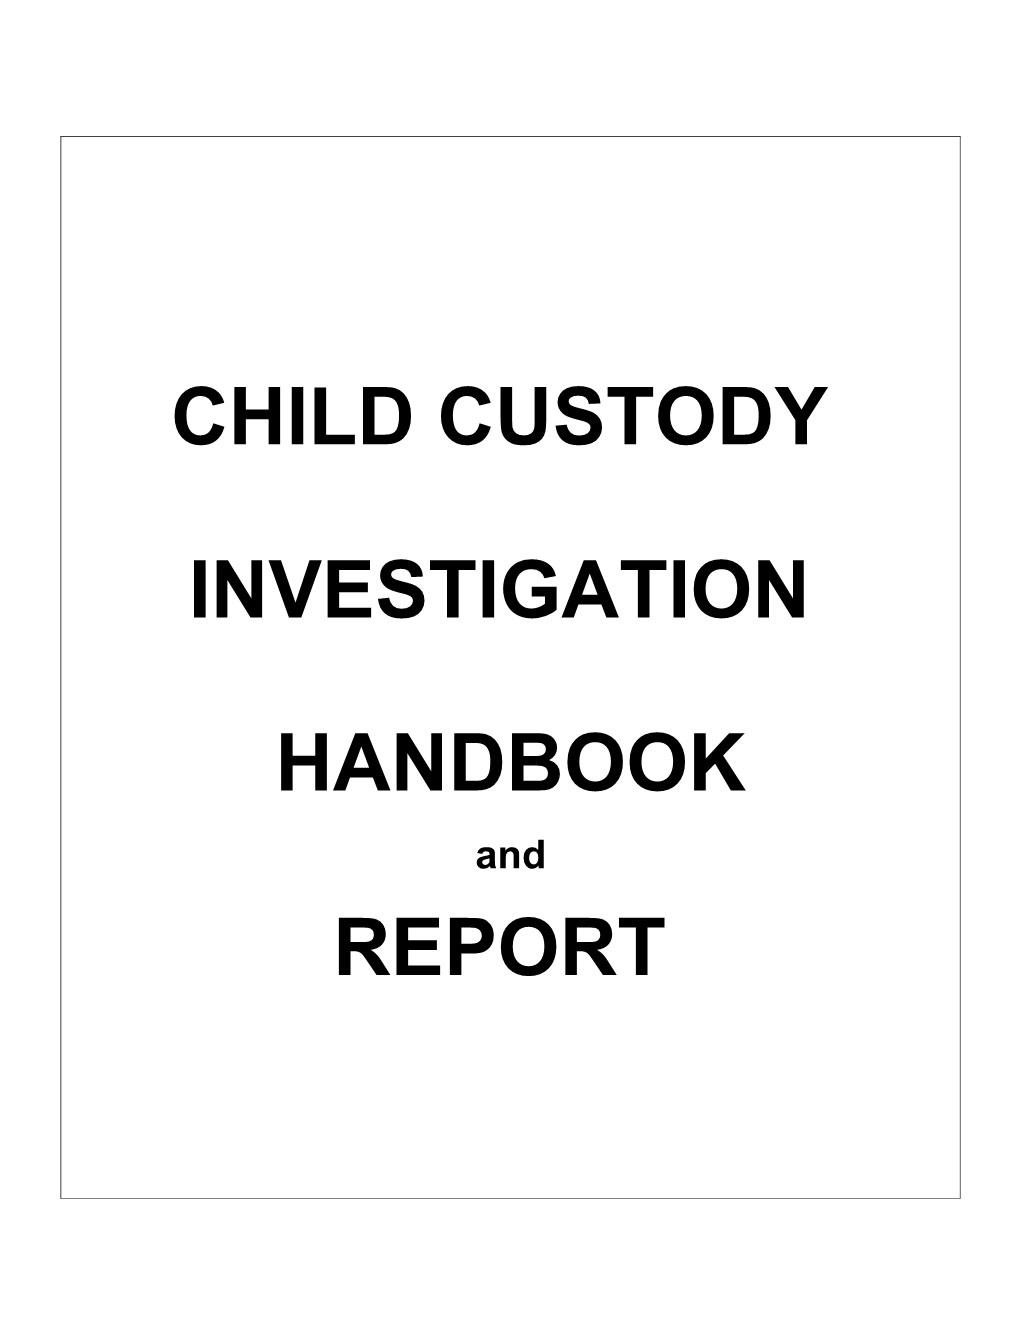 Child Custody Investigation Handbook